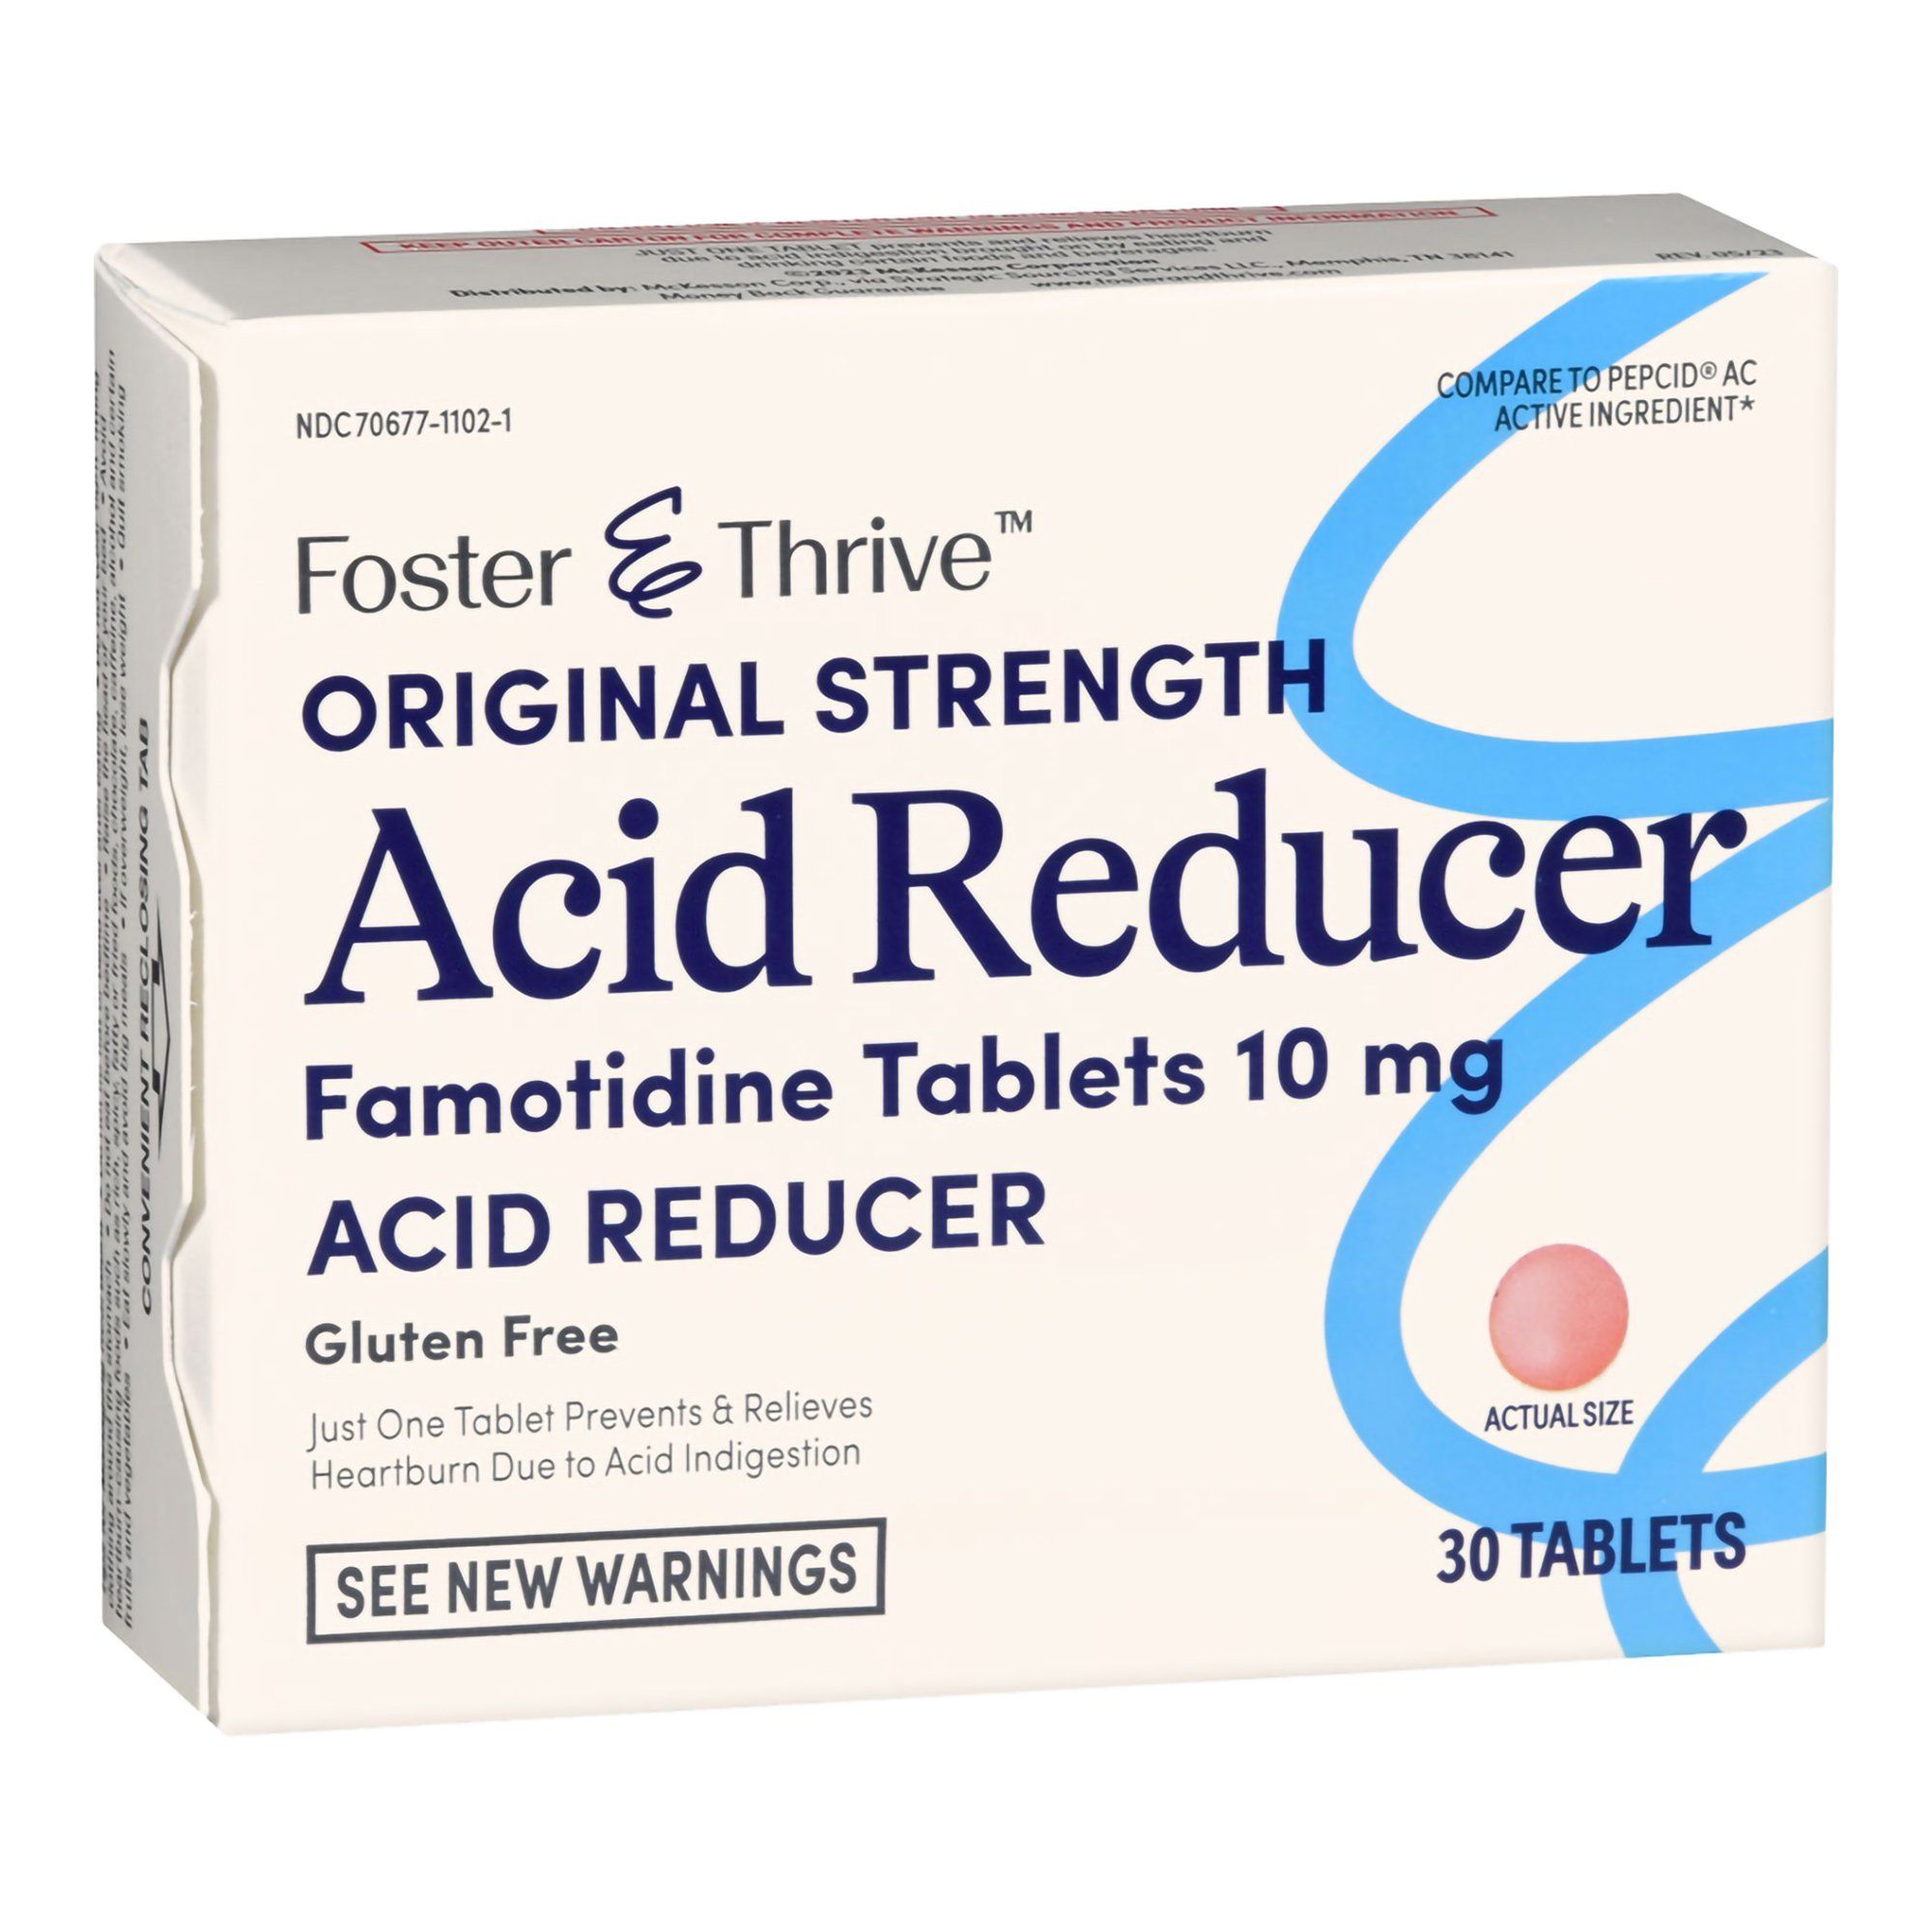 Foster & Thrive Original Strength Acid Reducer Famotidine Tablets, 10 mg - 30 ct